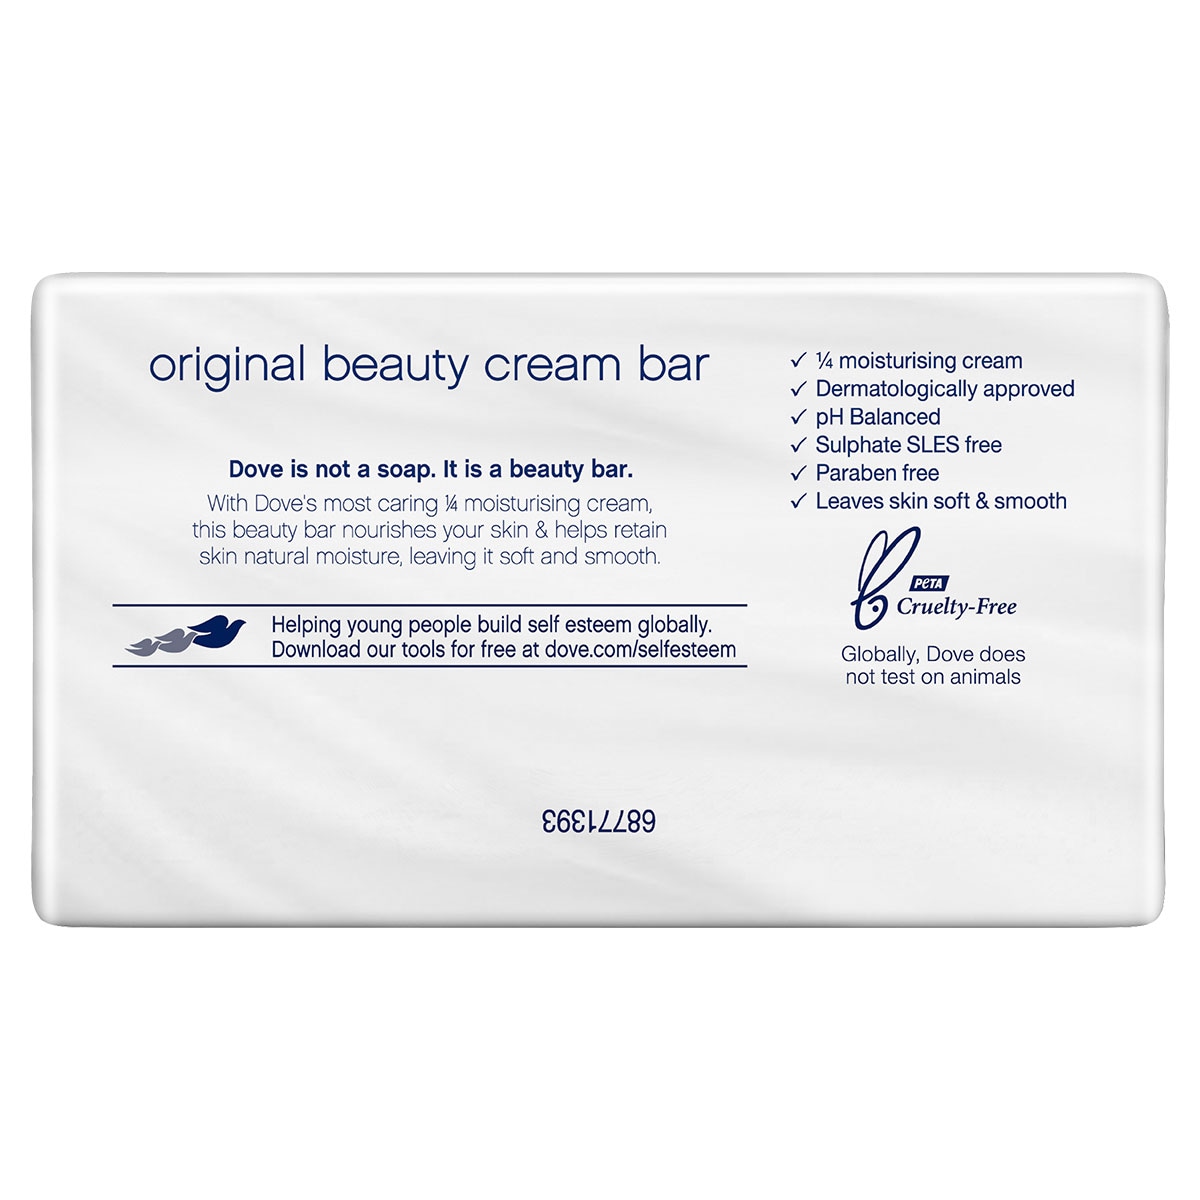 Dove Original Moisturising Beauty Cream Bar 90g x 4 Bars